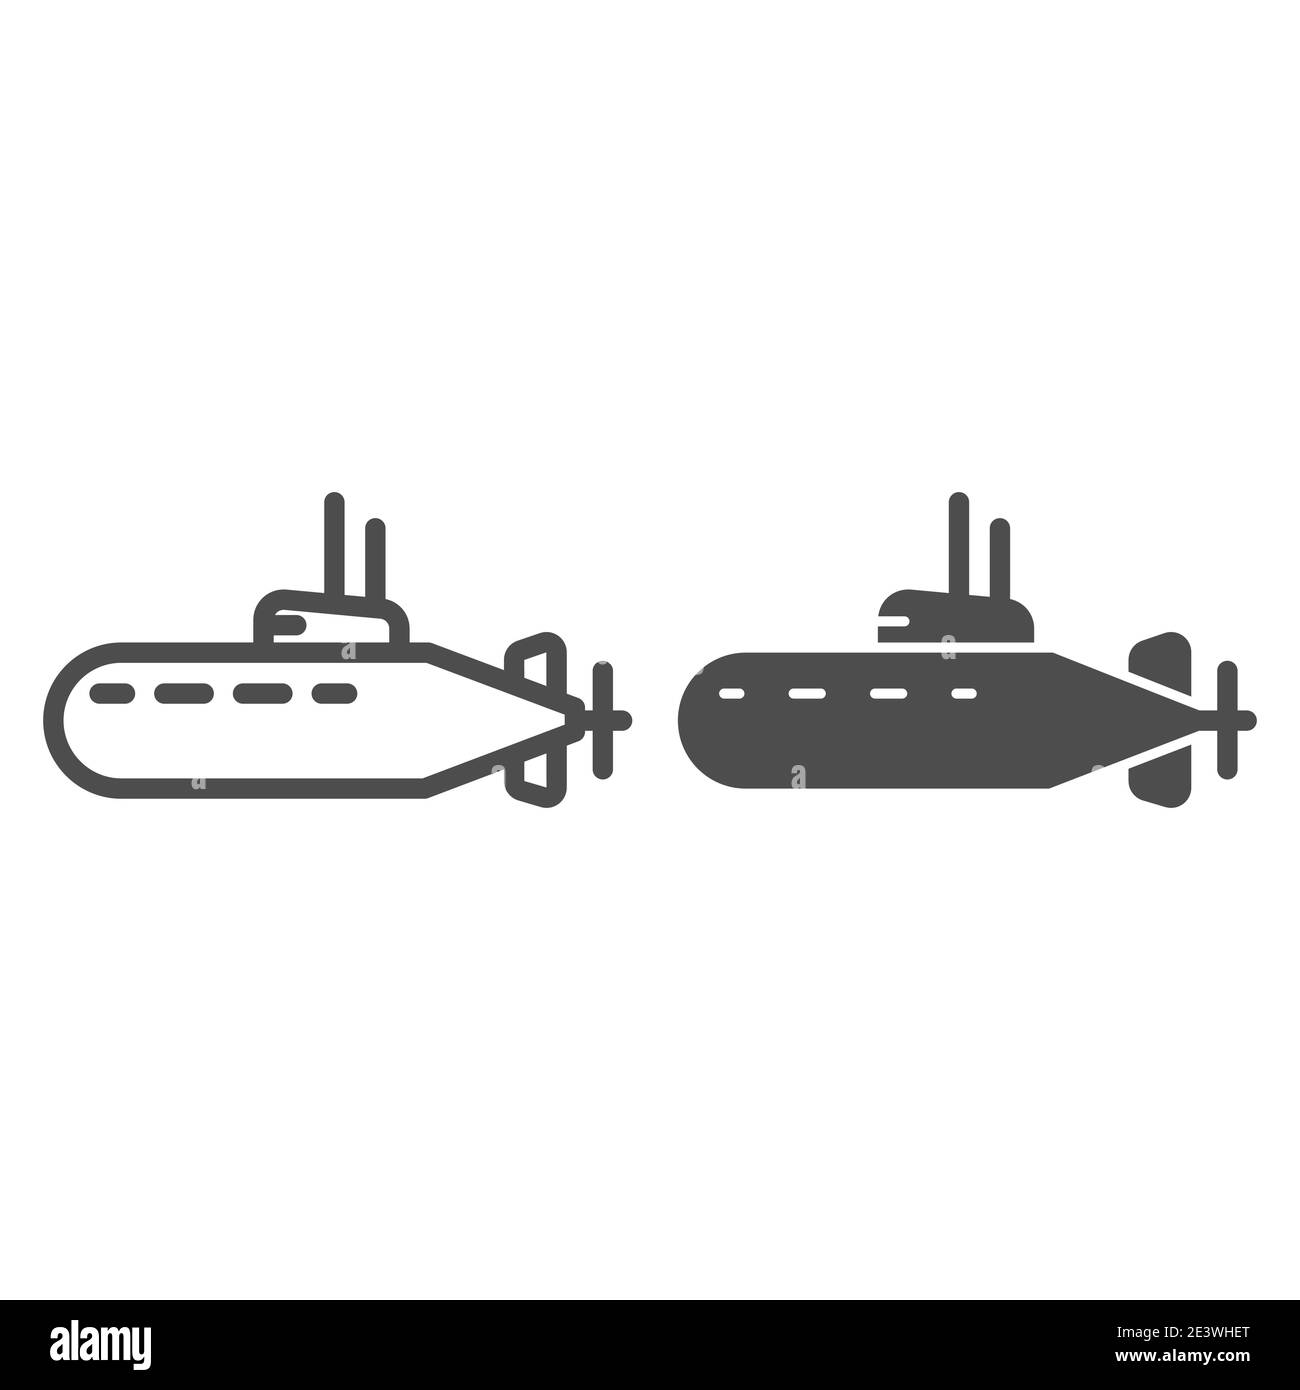 Línea submarina e icono sólido, concepto náutico, submarino signo de barco sobre fondo blanco, Submarino con icono periscopio en estilo contorno para móviles Ilustración del Vector